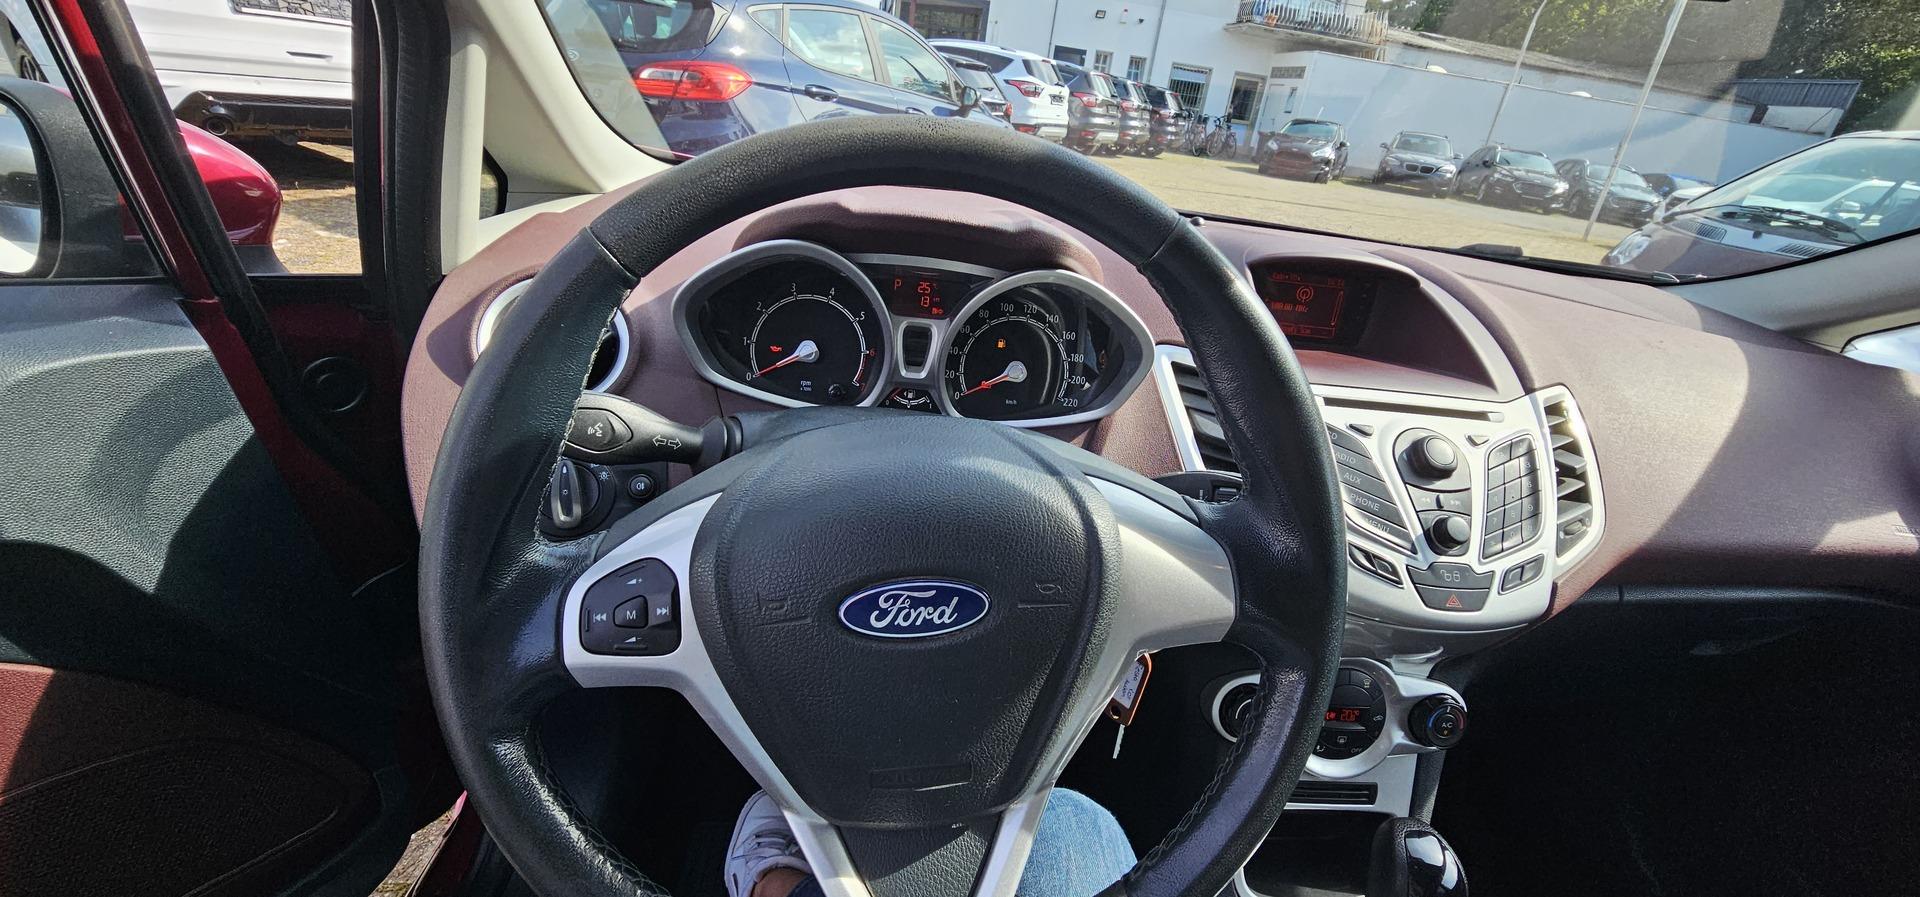 Ford Fiesta 1.4 Autom. Titanium Dachspoiler auto. Klima Alufelgen